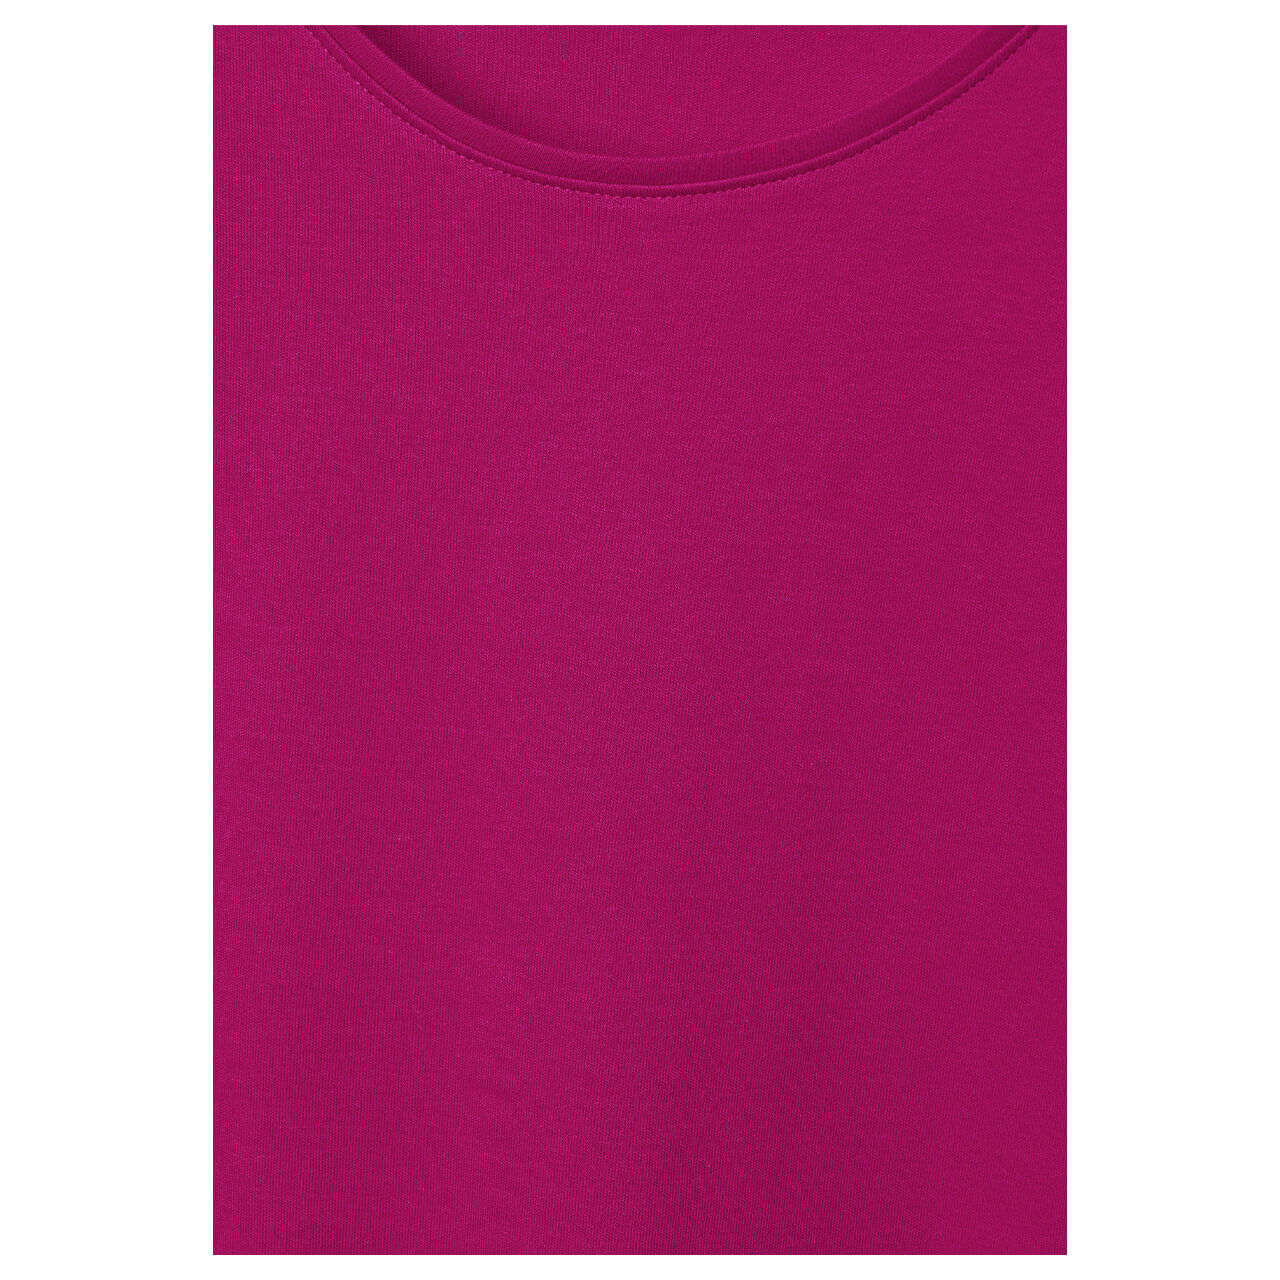 Cecil Lena T-Shirt cool pink